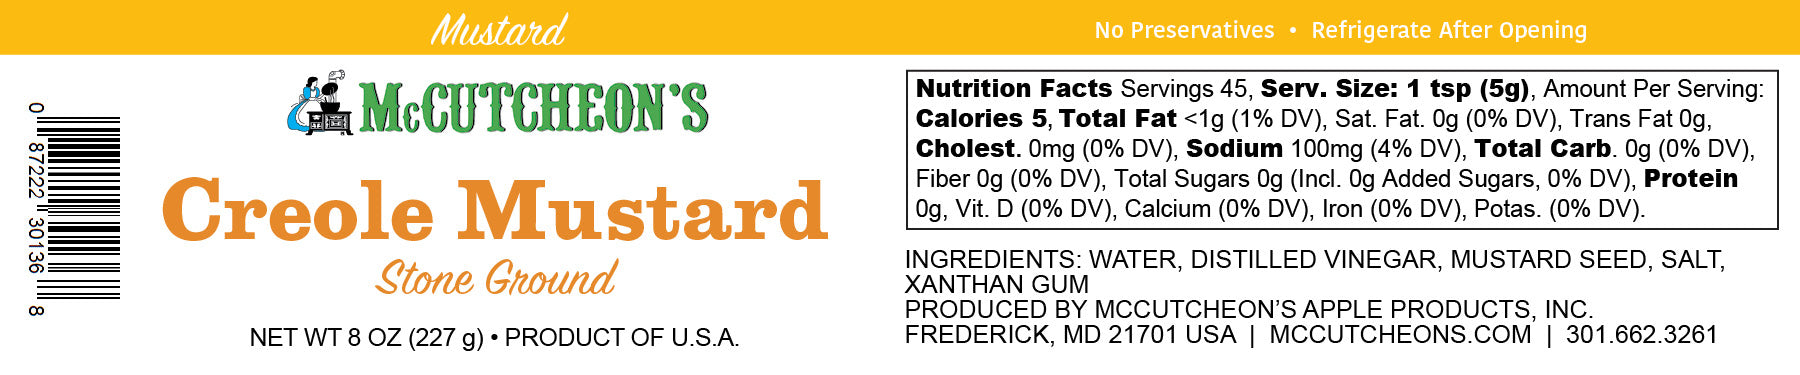 nutritional label for McCutcheon's mini stone ground creole mustard 